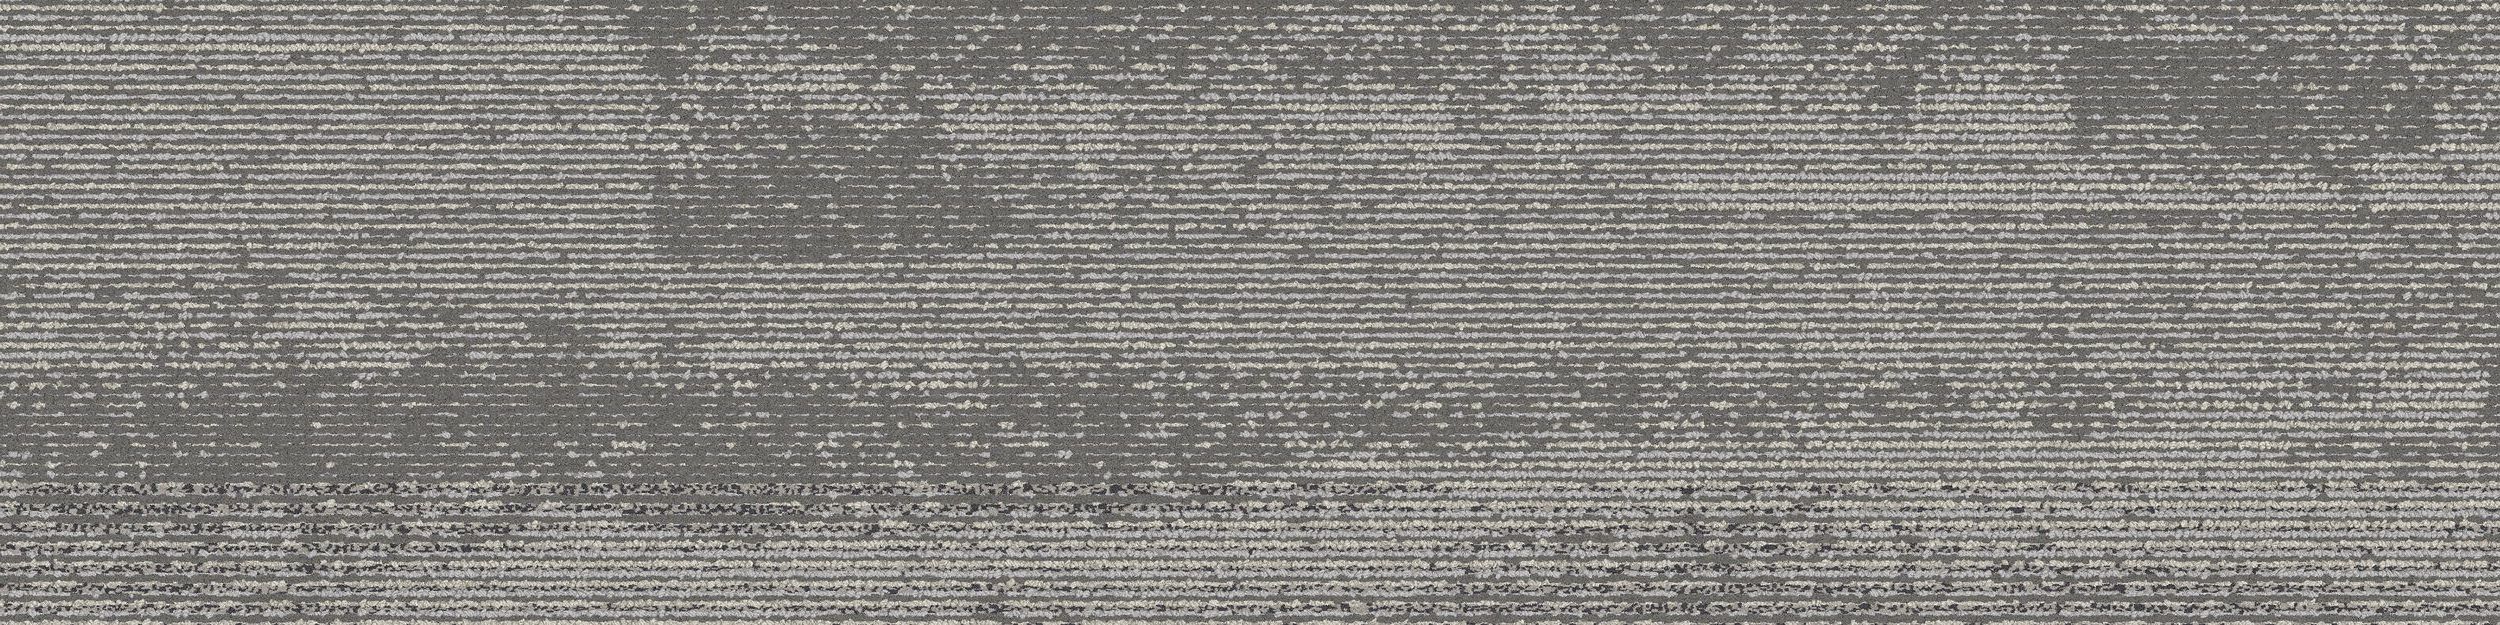 CT112 Carpet Tile In Pewter image number 2